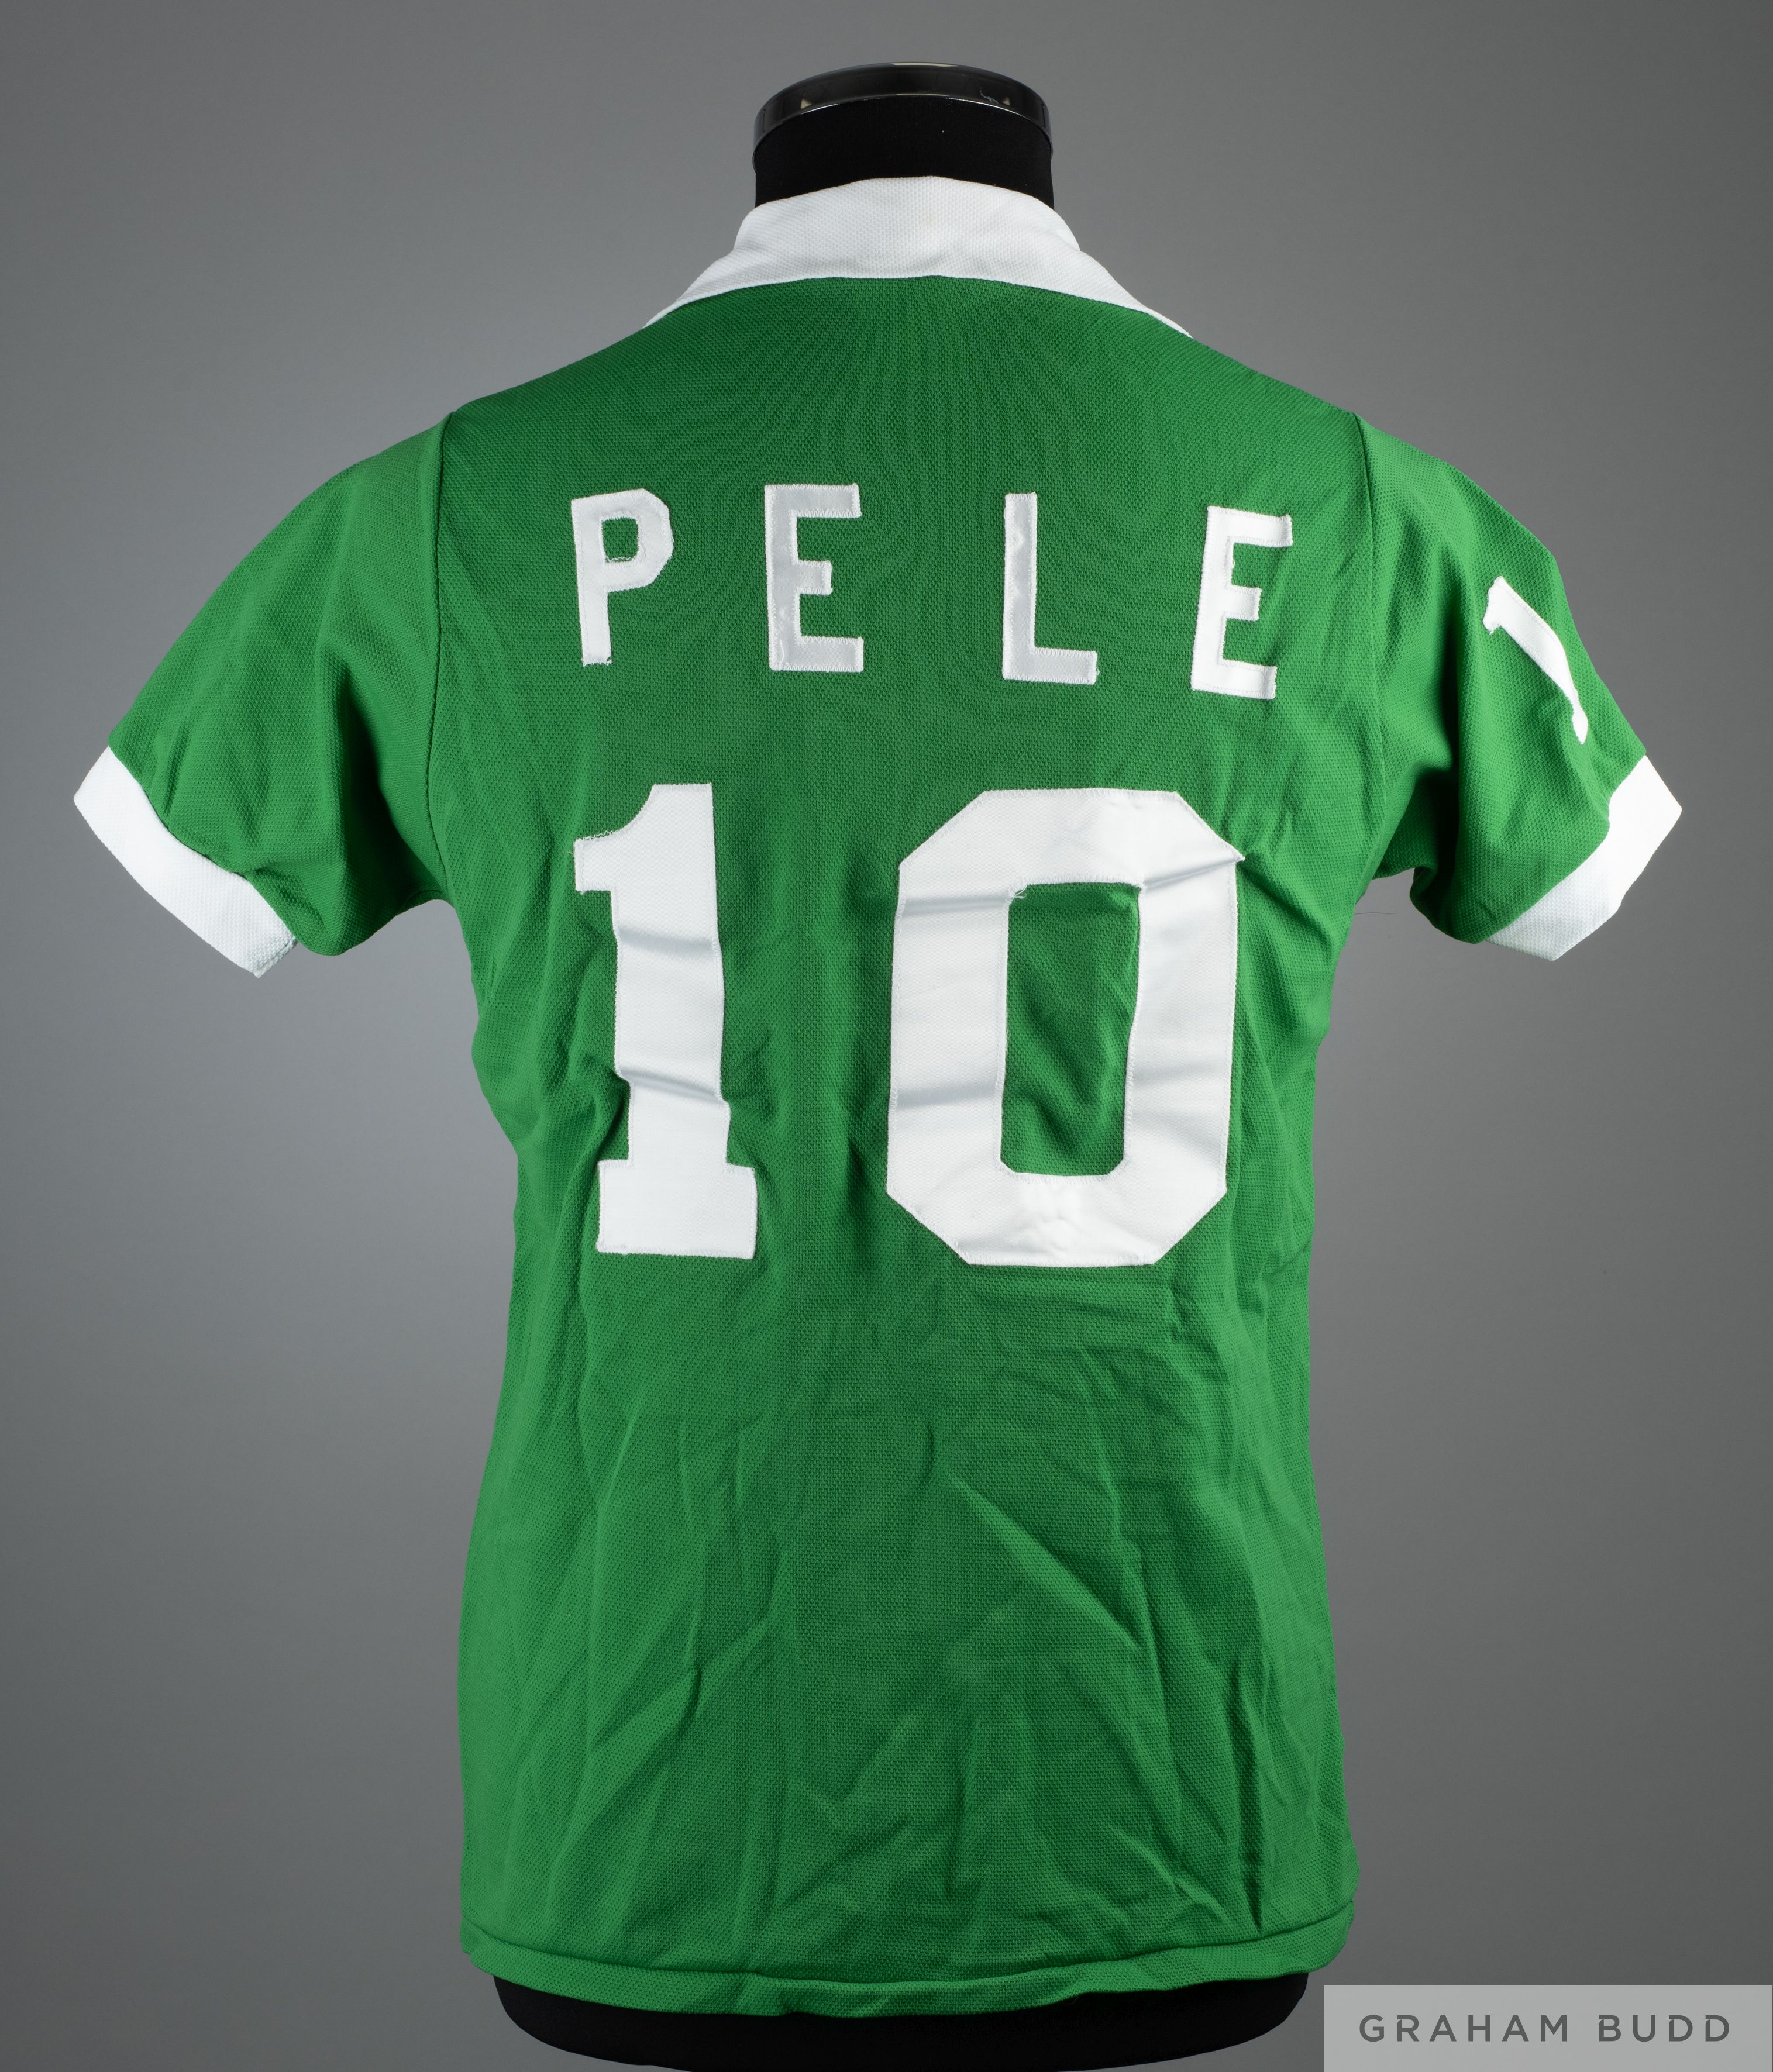 Pele green and white No.10 New York Cosmos shirt, 1977-78 - Image 2 of 2